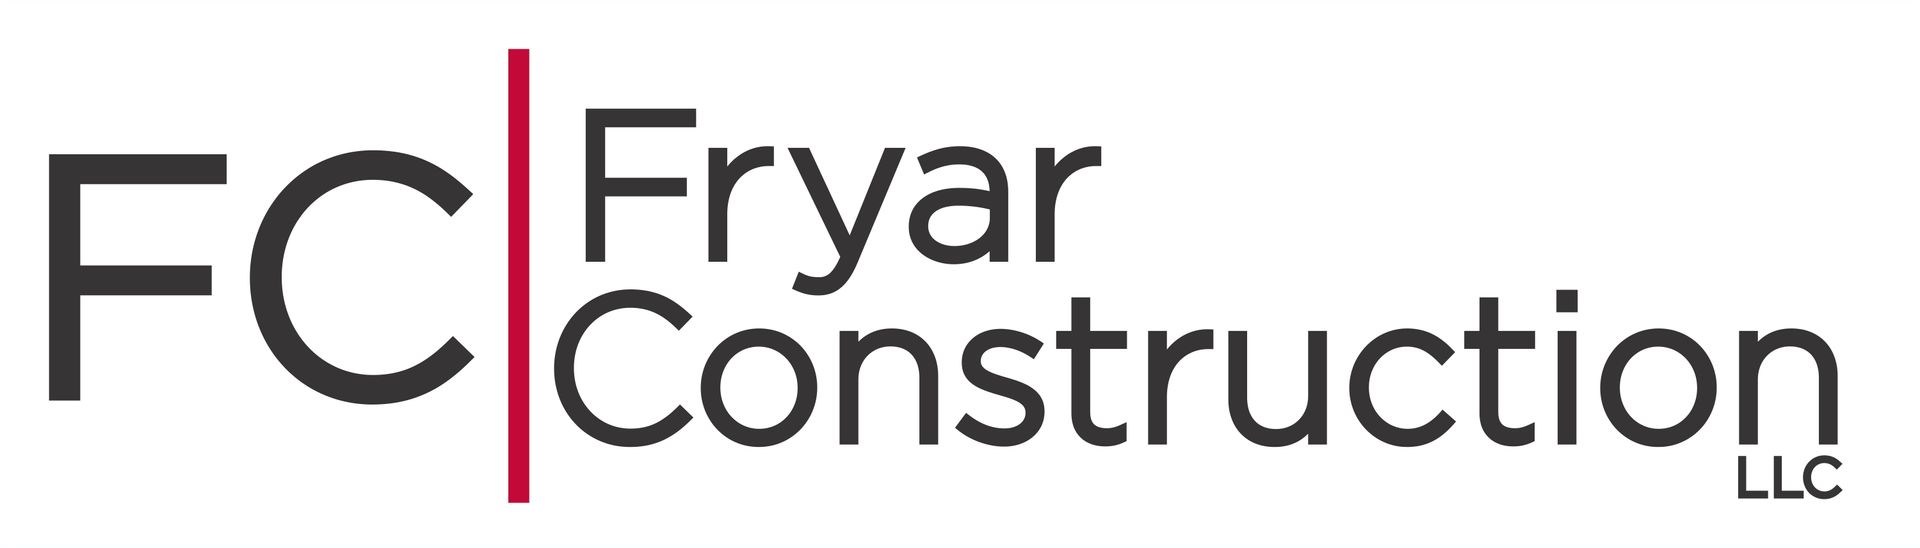 Fryar Construction - Logo